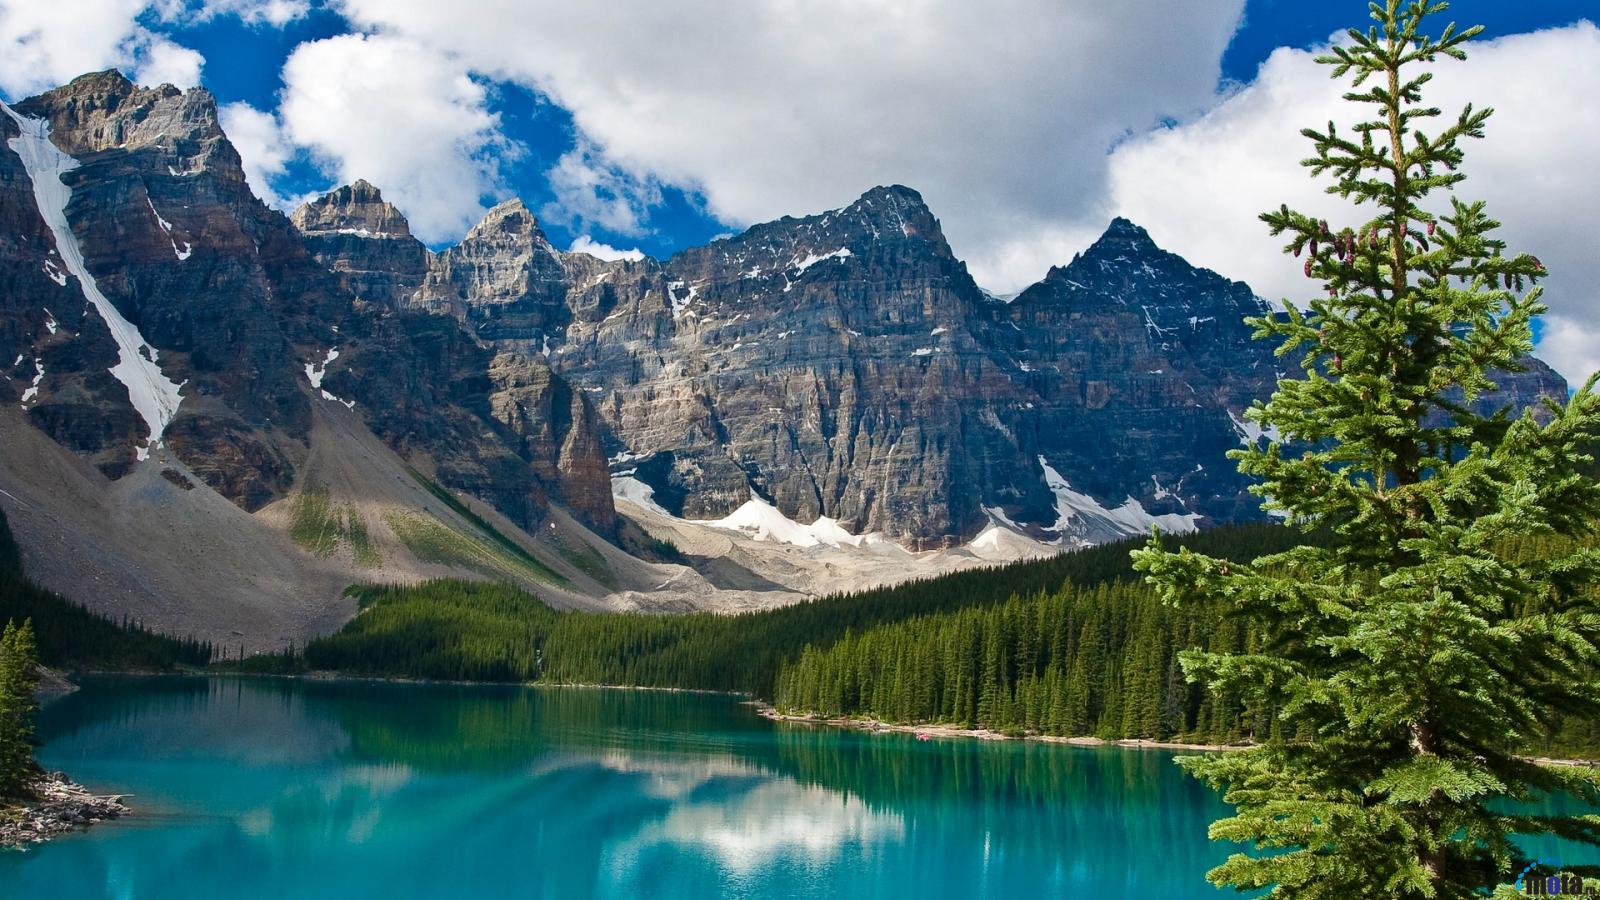 motaruDownload Wallpaper Blue lake and rocky mountains 1600 x 900